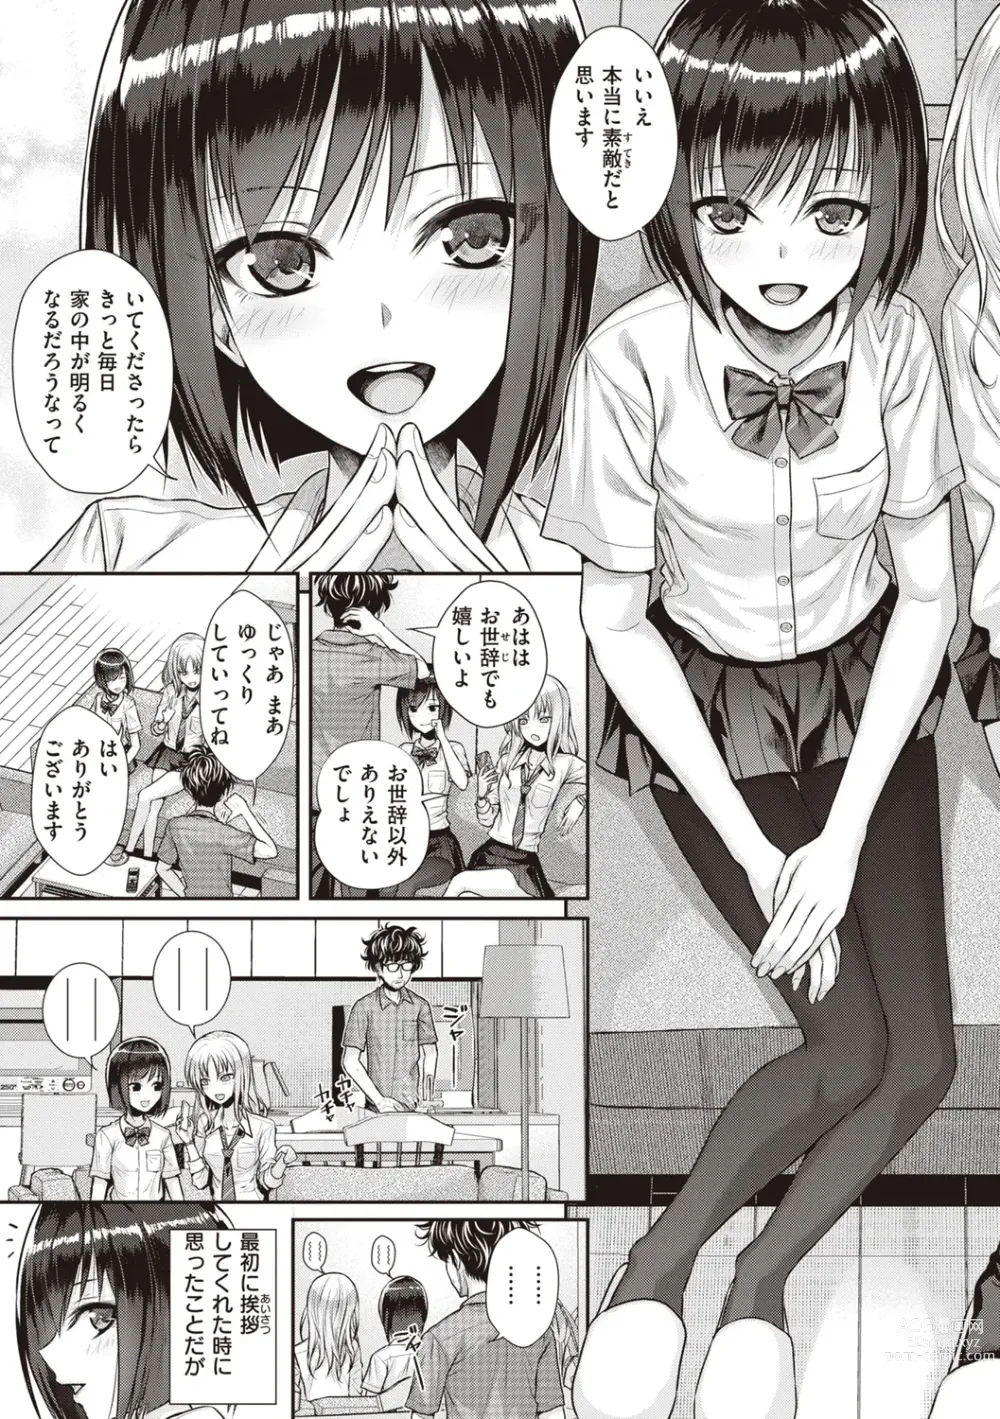 Page 29 of manga Prototype Teens